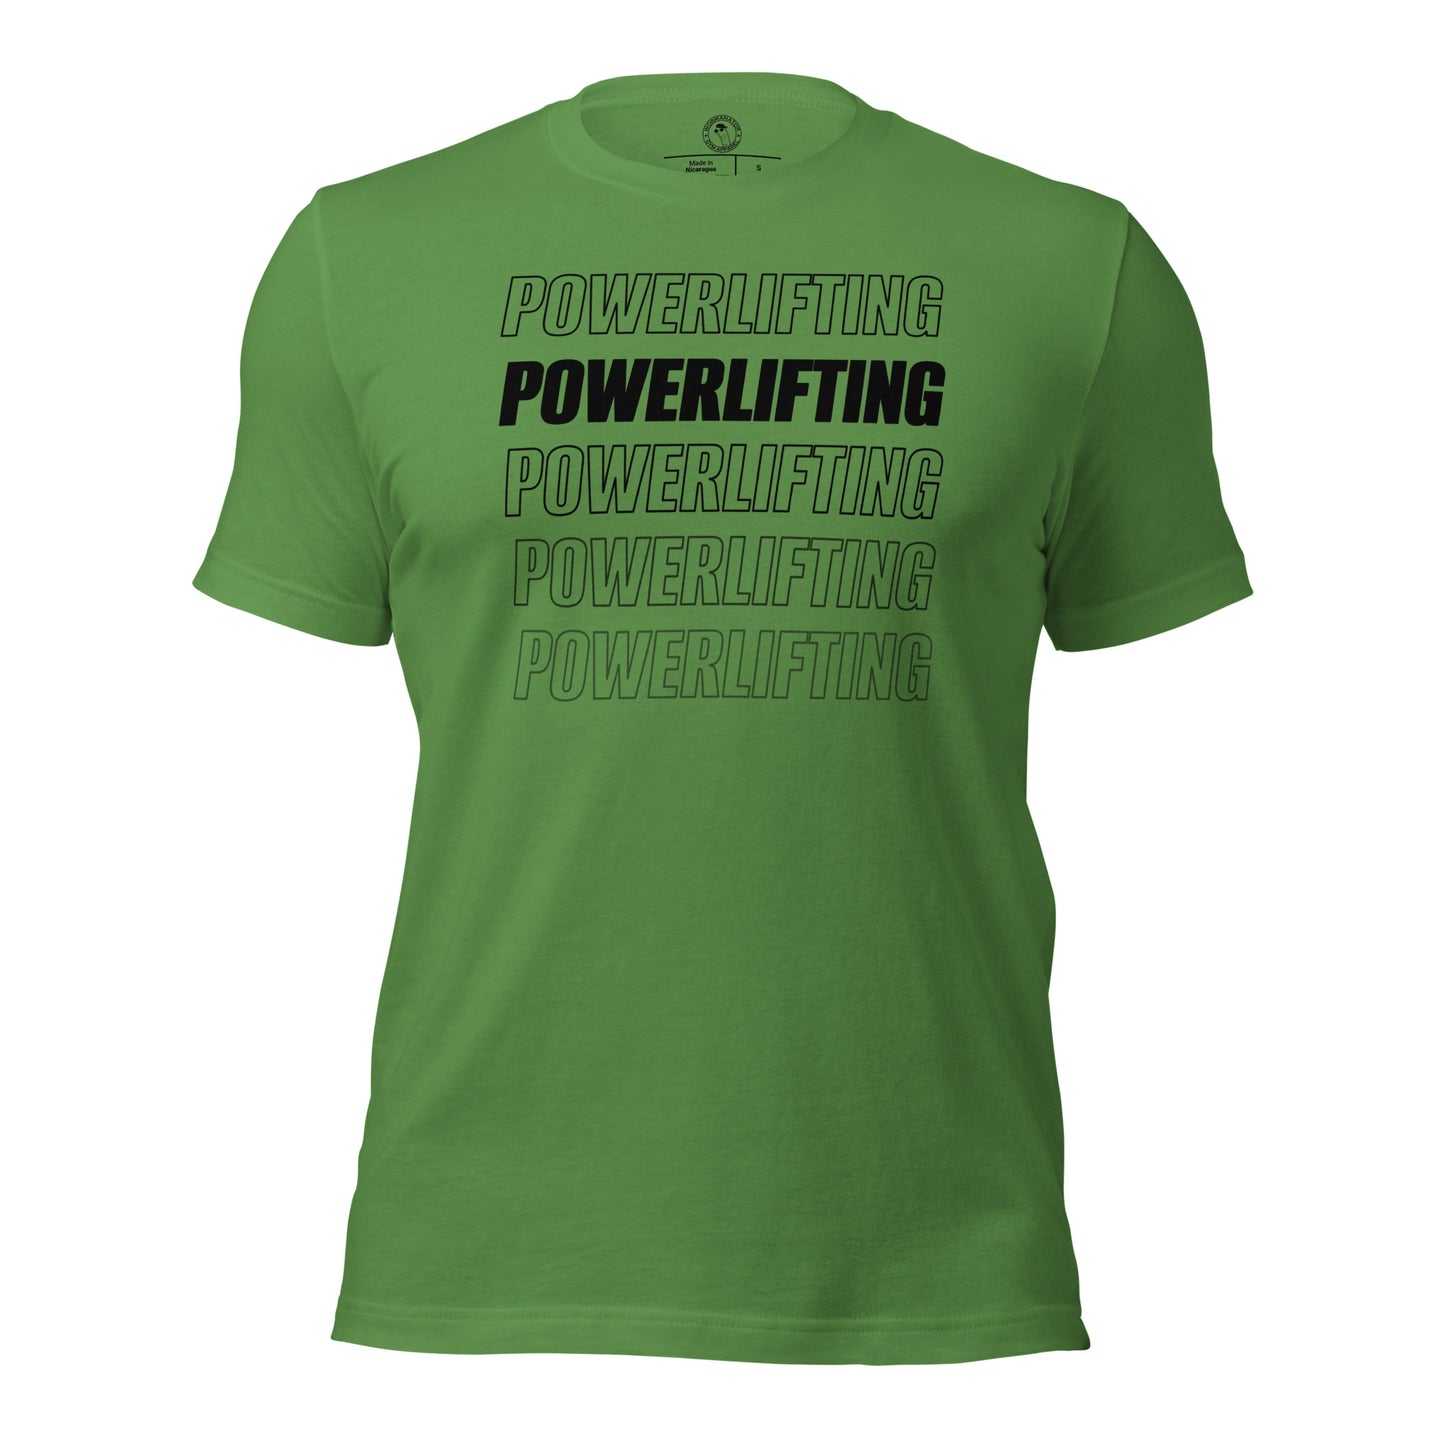 Powerlifting Shirt in Leaf Green